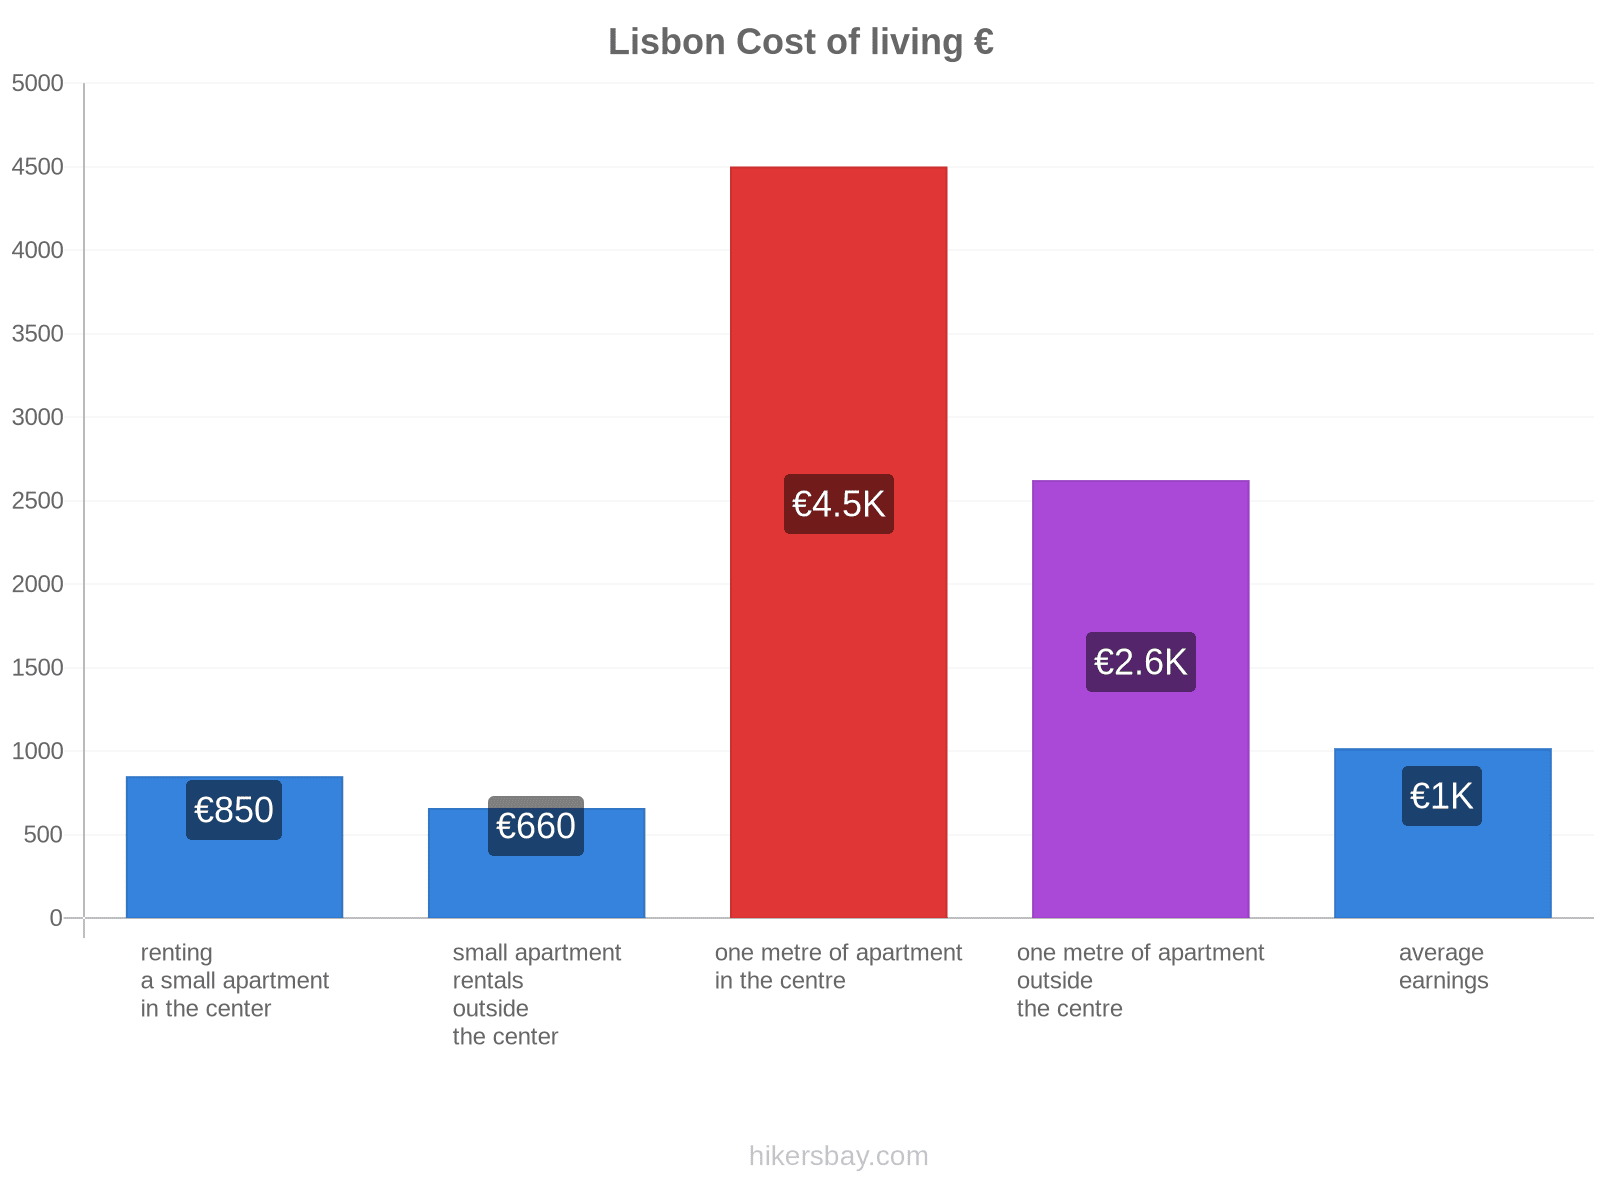 Lisbon cost of living hikersbay.com